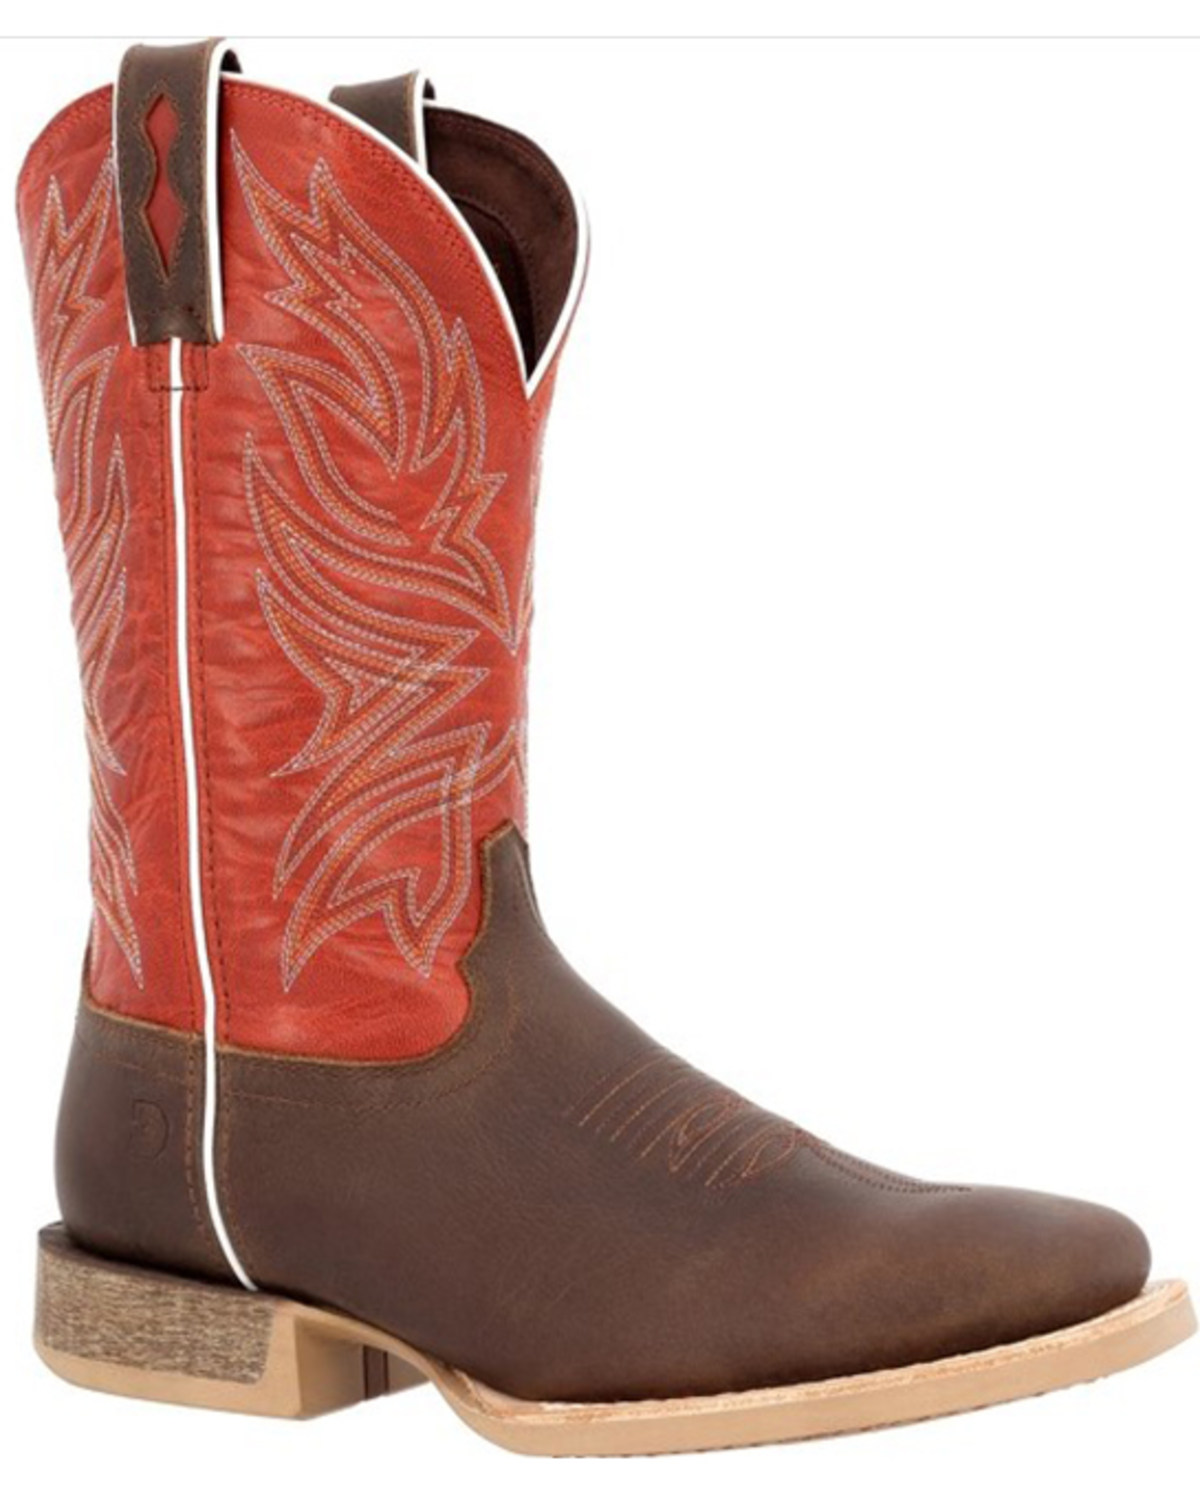 Durango Men's Rebel Pro™ Western Boot - Broad Square Toe